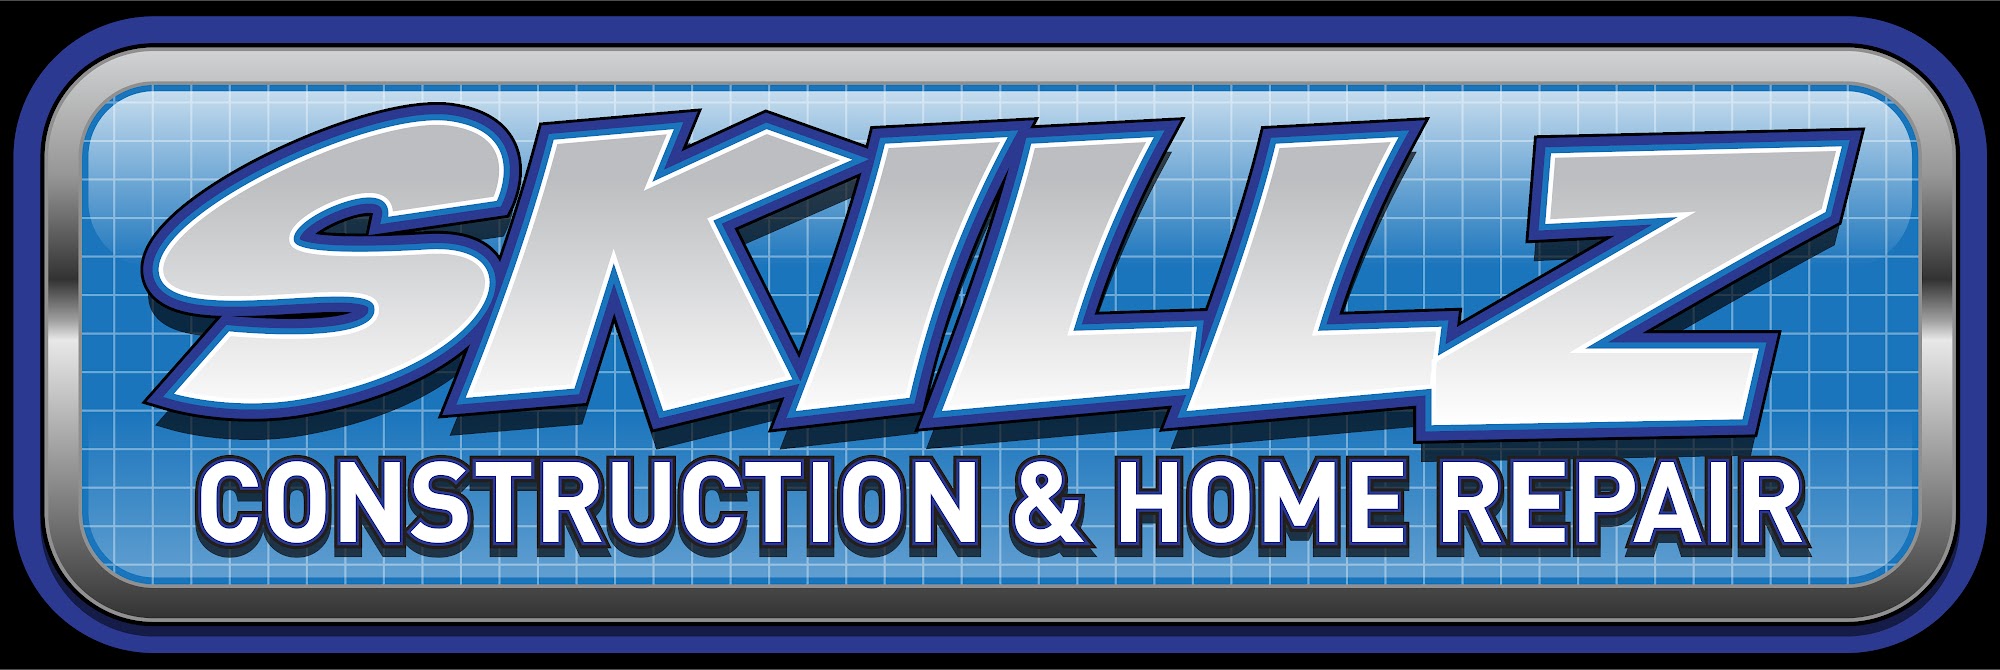 Skillz Construction and Home Repair LLC